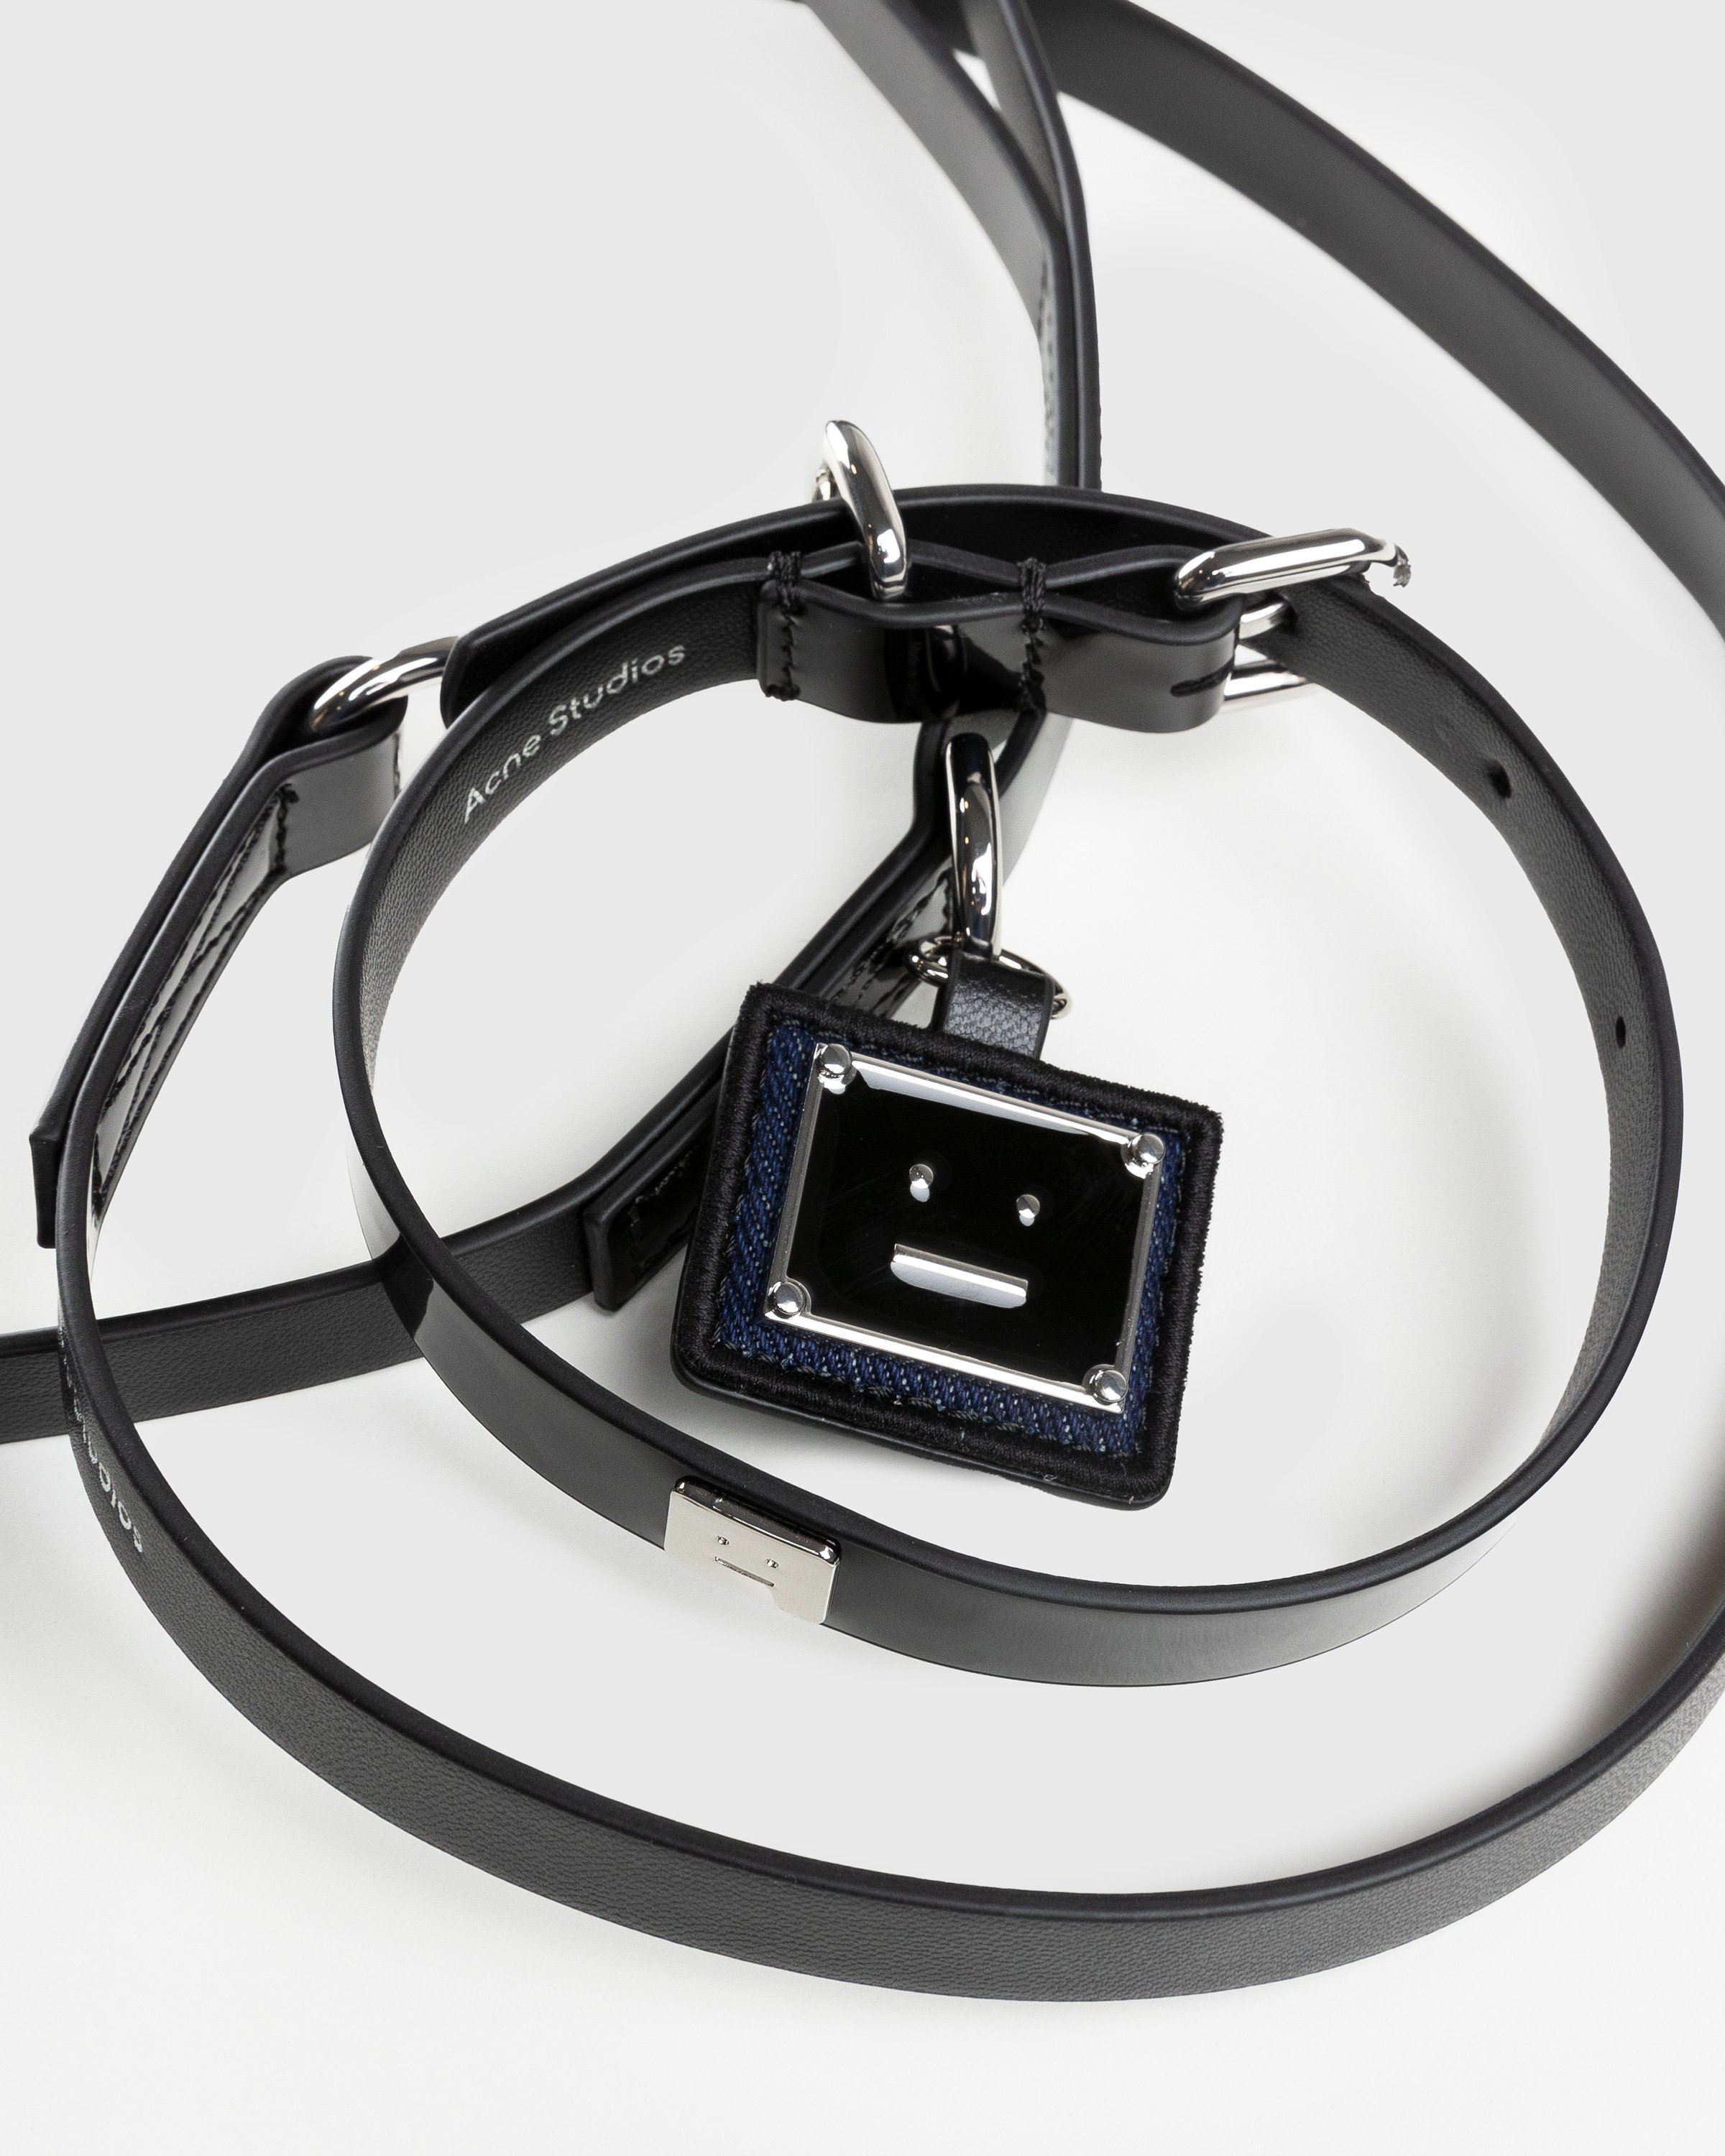 Acne Studios - Face Logo Pet Collar and Leash Black - Lifestyle - Black - Image 3